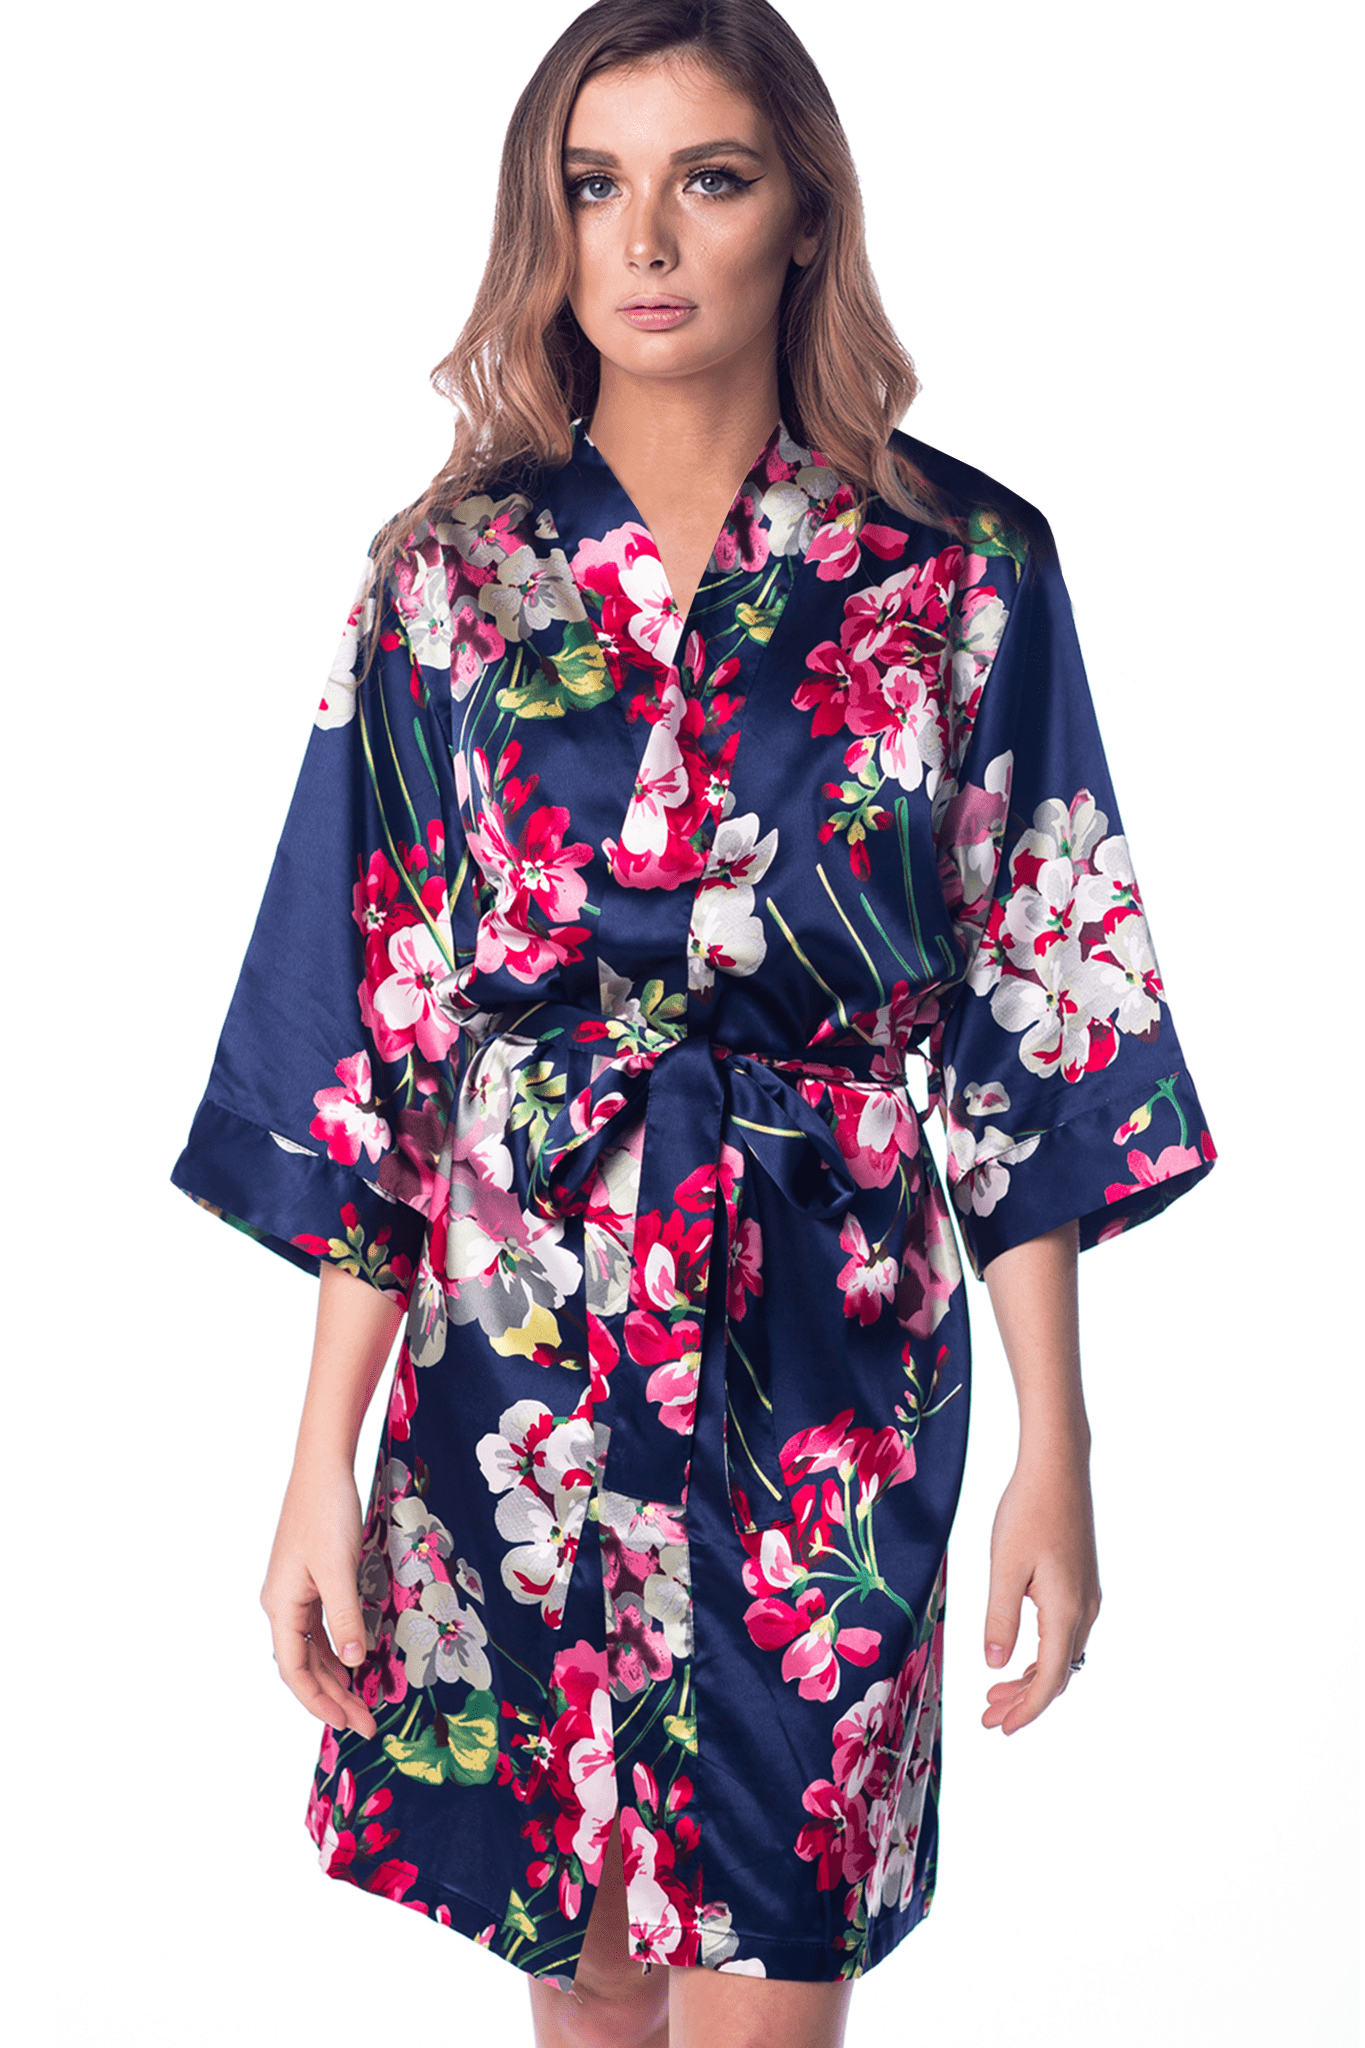 Pretty Robes Women’s Floral Satin Silky Robe Kimono For Bride Bridesmaids Flower Girls Comfy